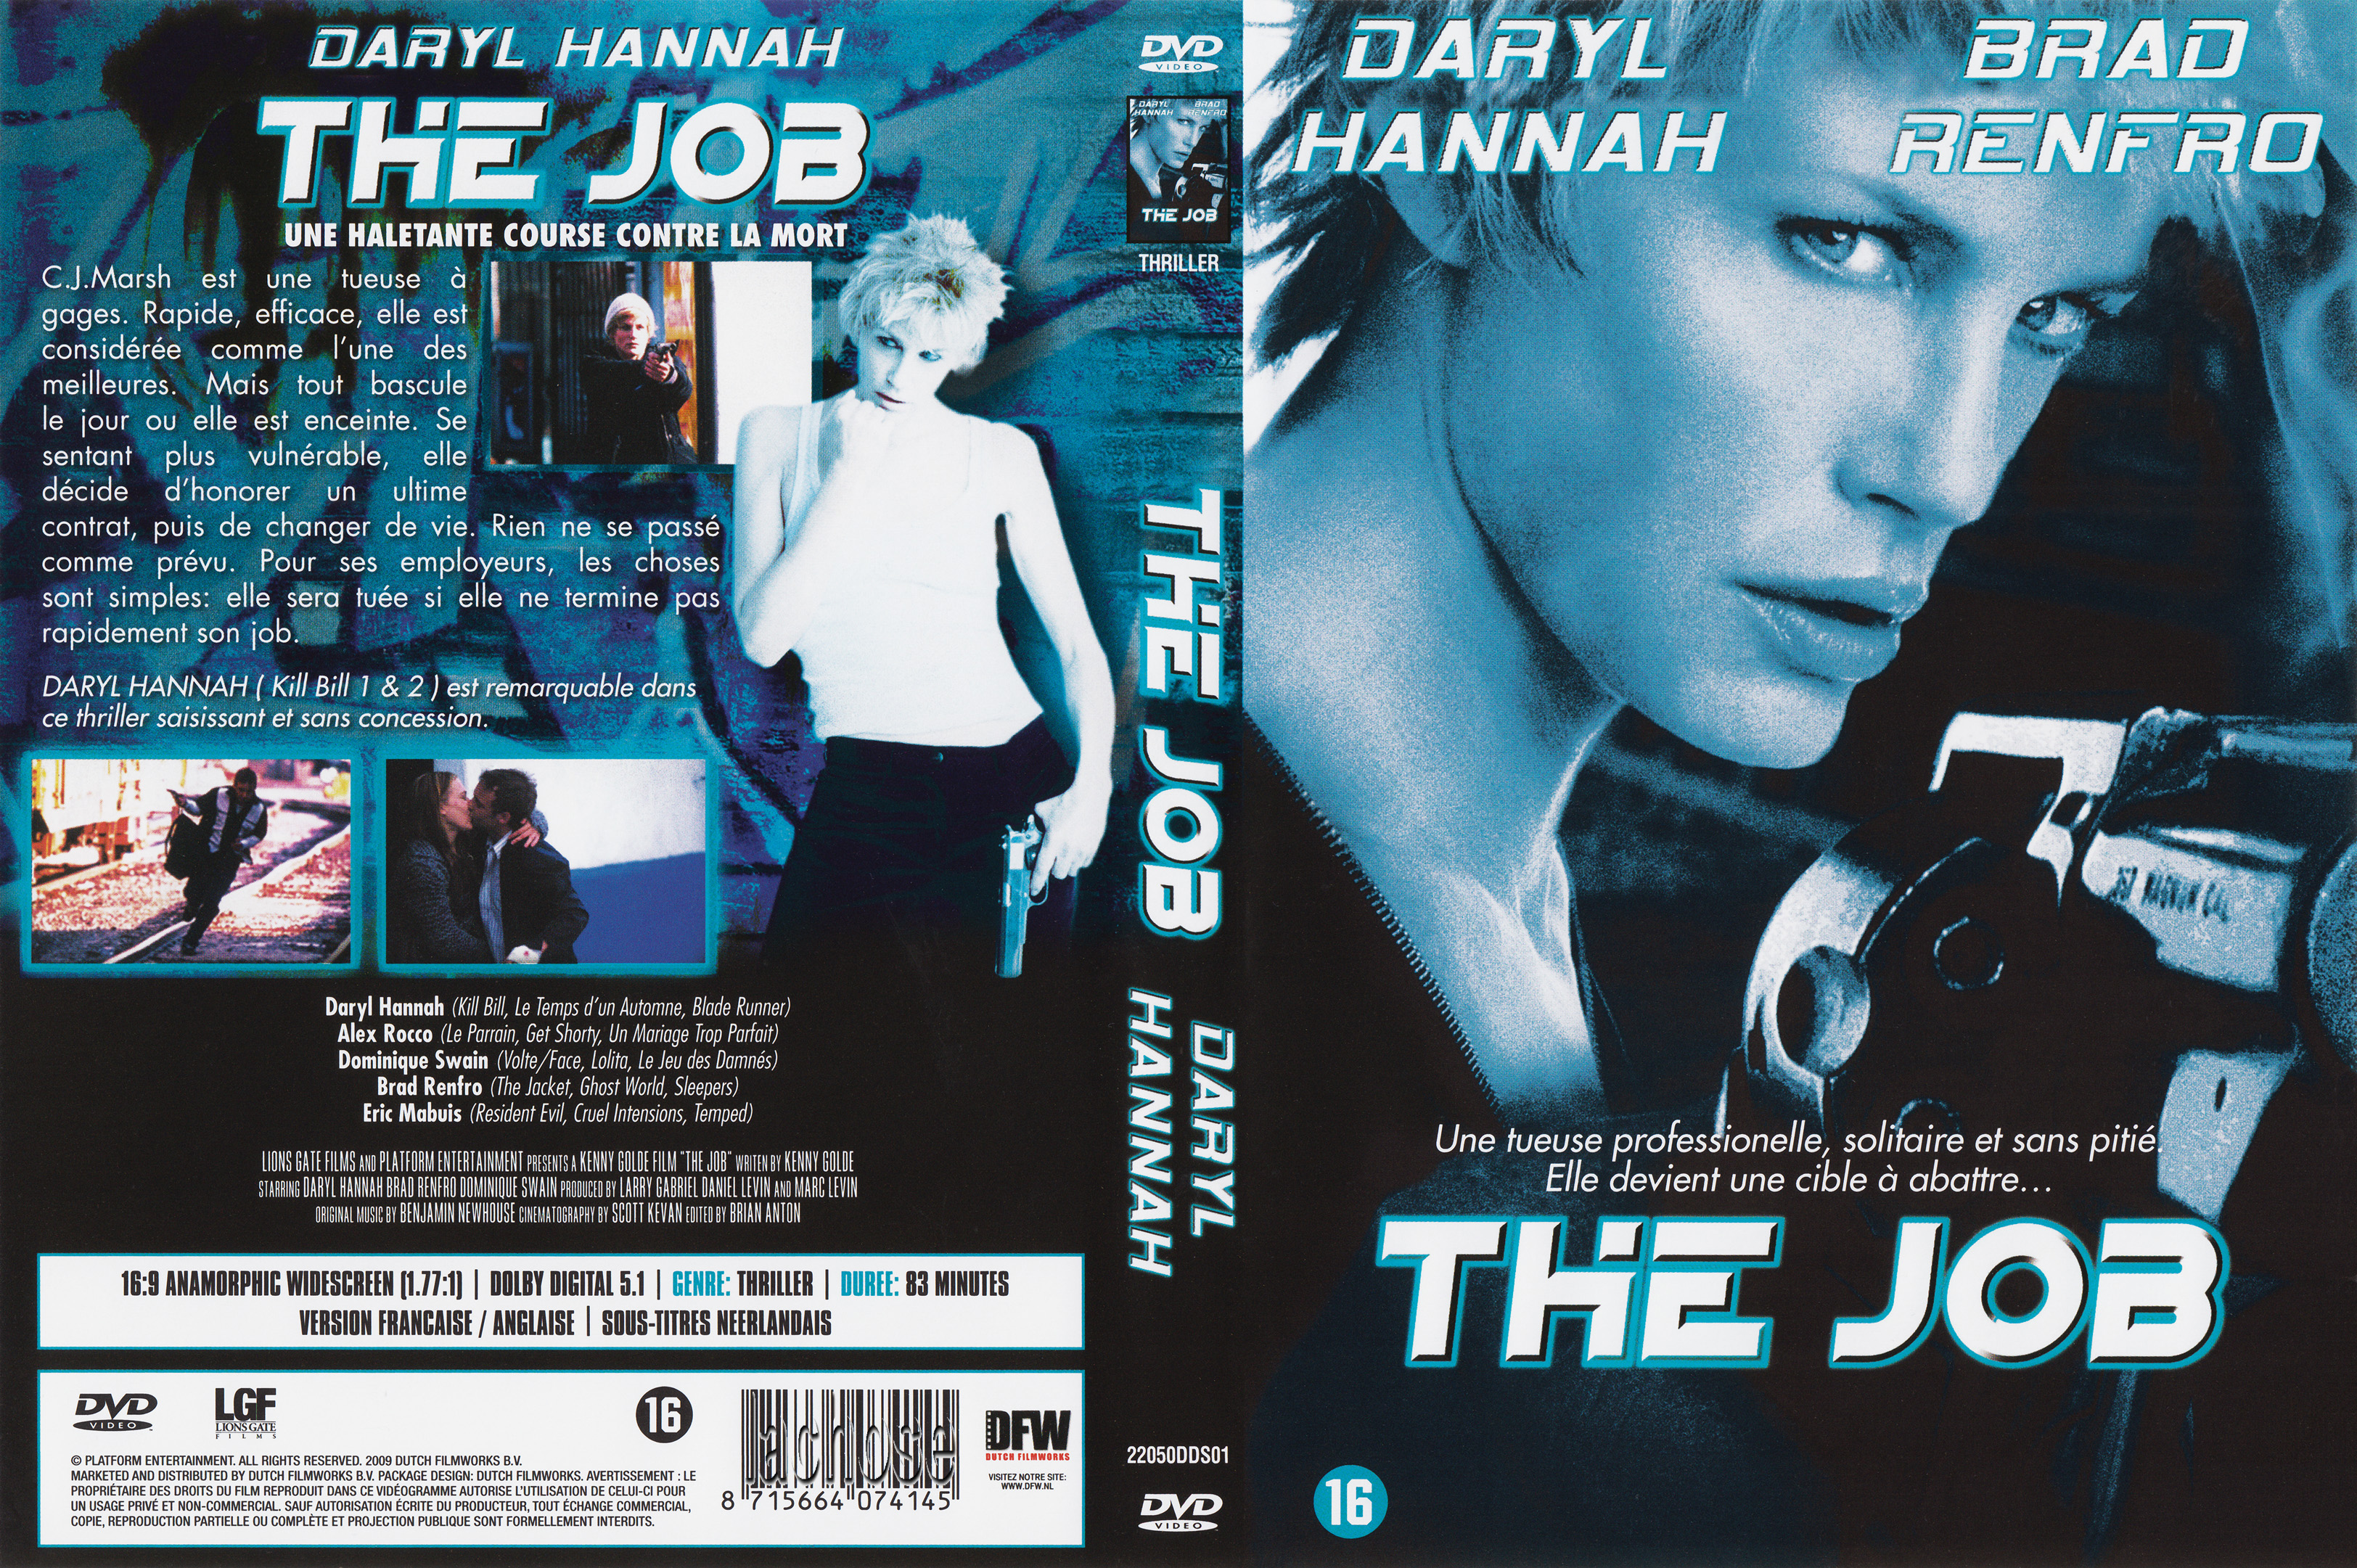 Jaquette DVD The job v3